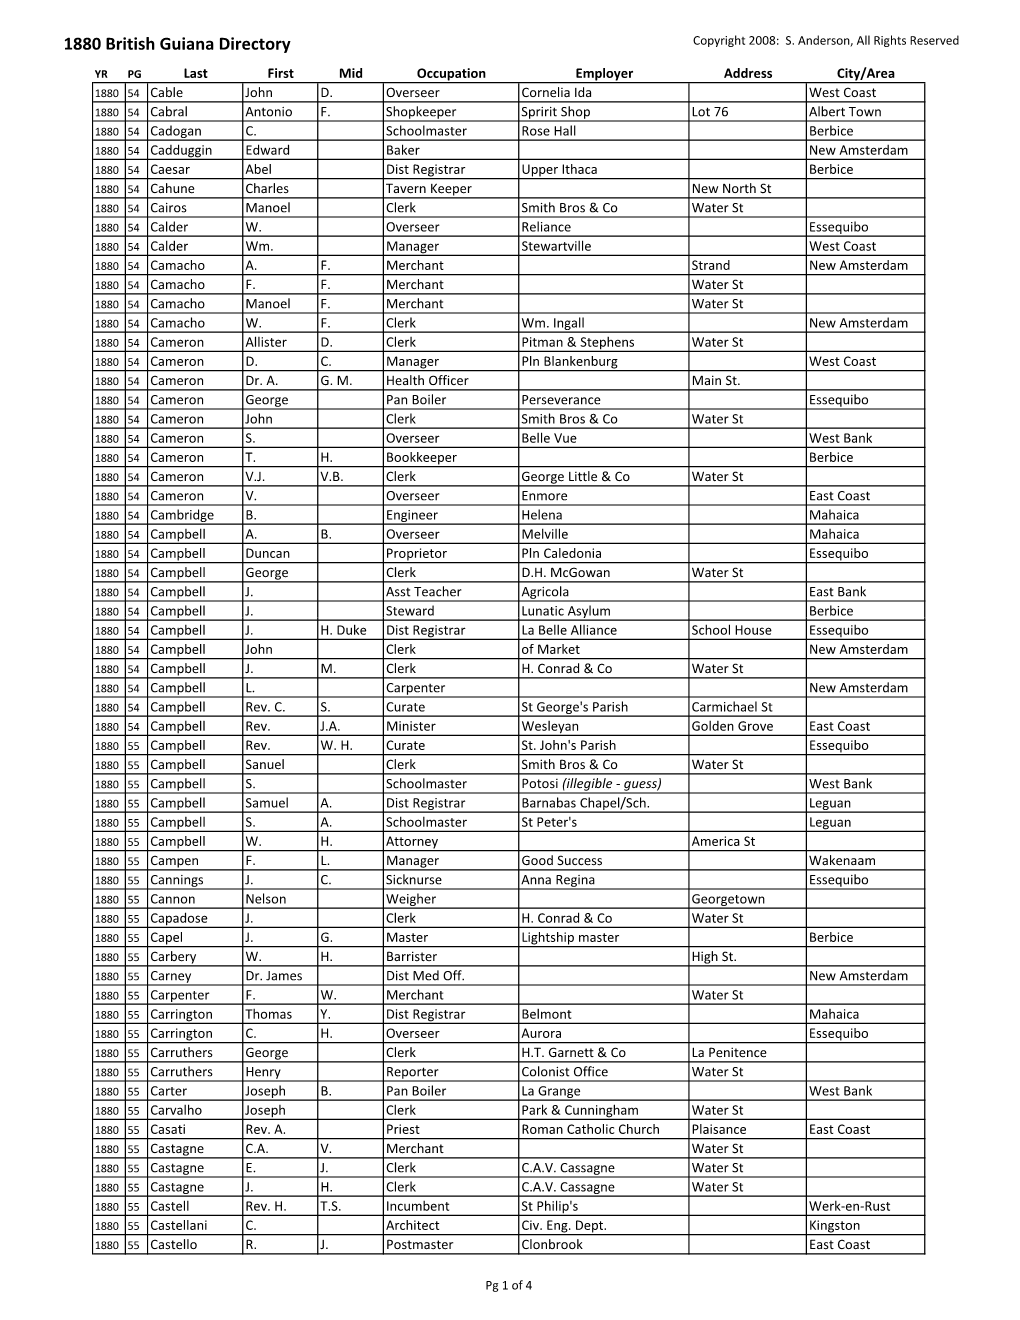 1880 British Guiana Directory Copyright 2008: S